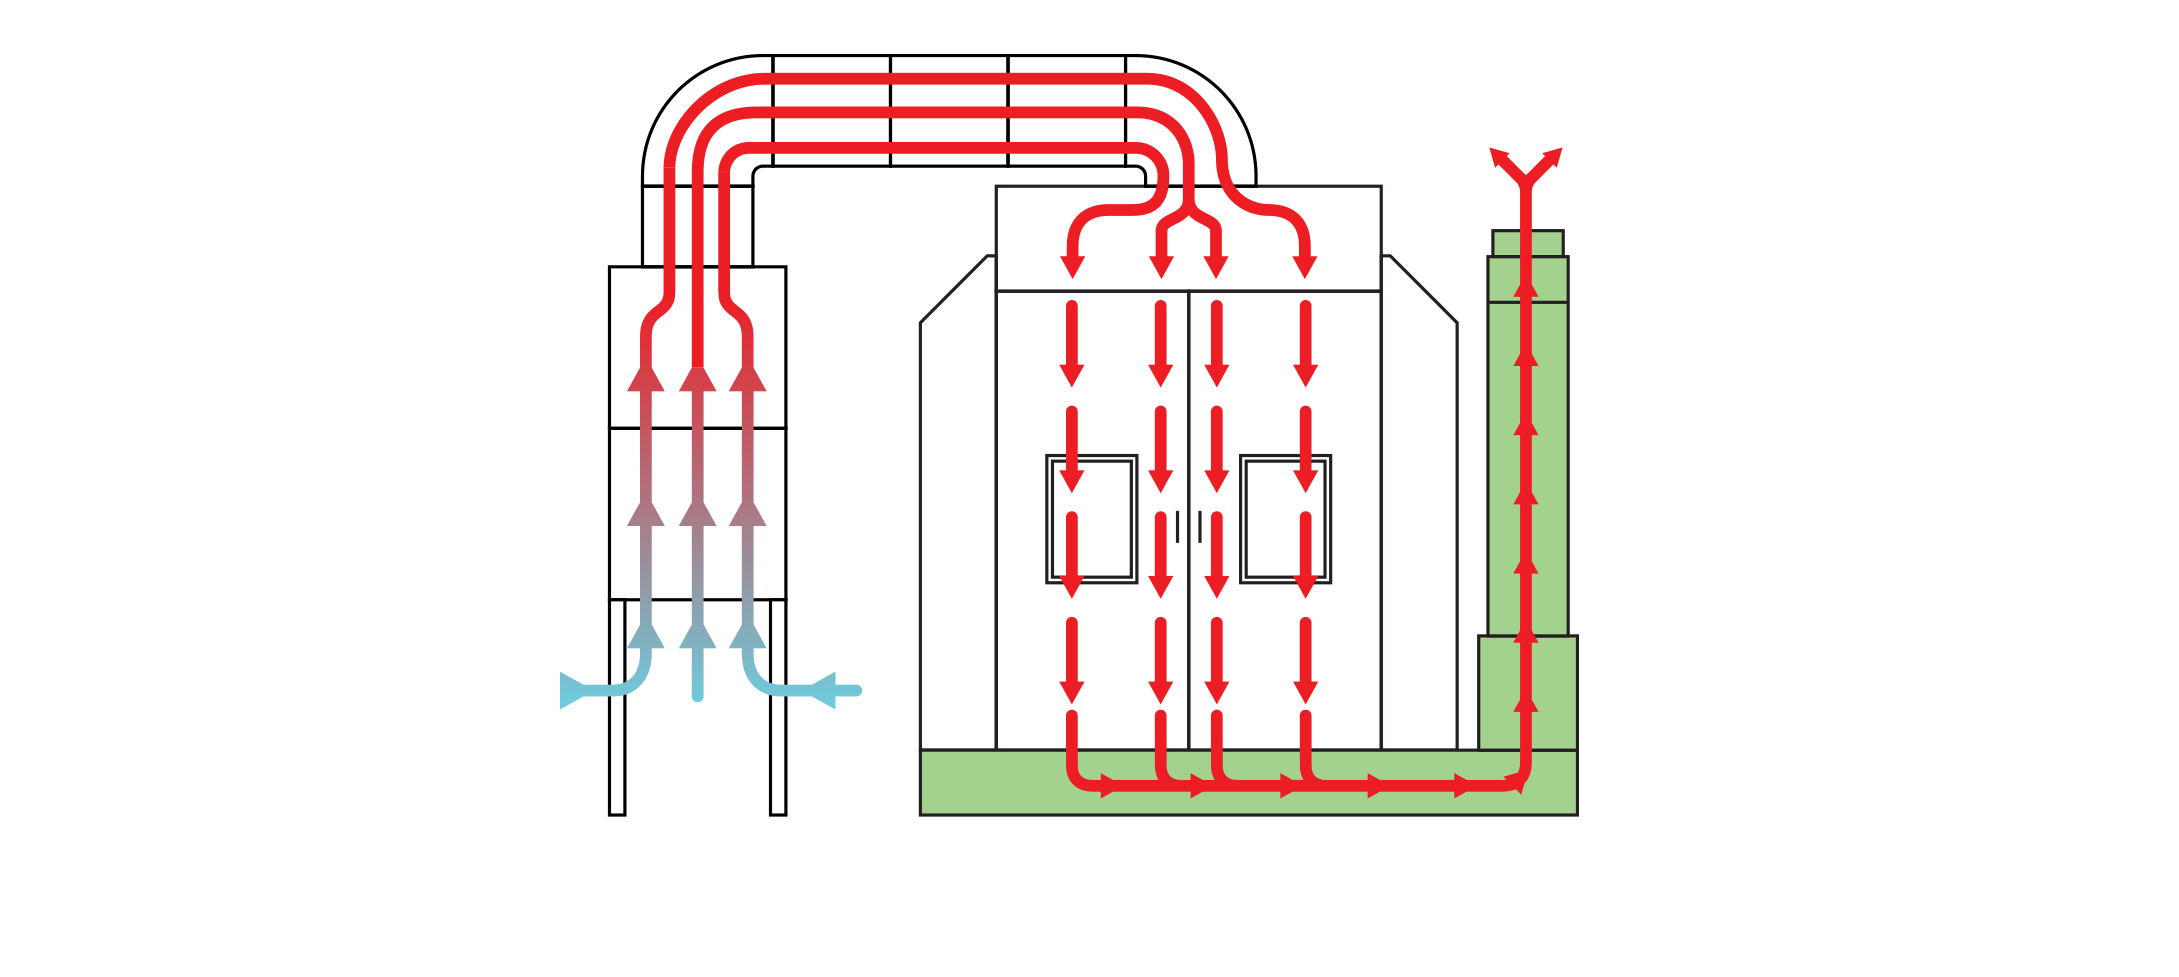 Full Down Draft Heated Air Flow Diagram